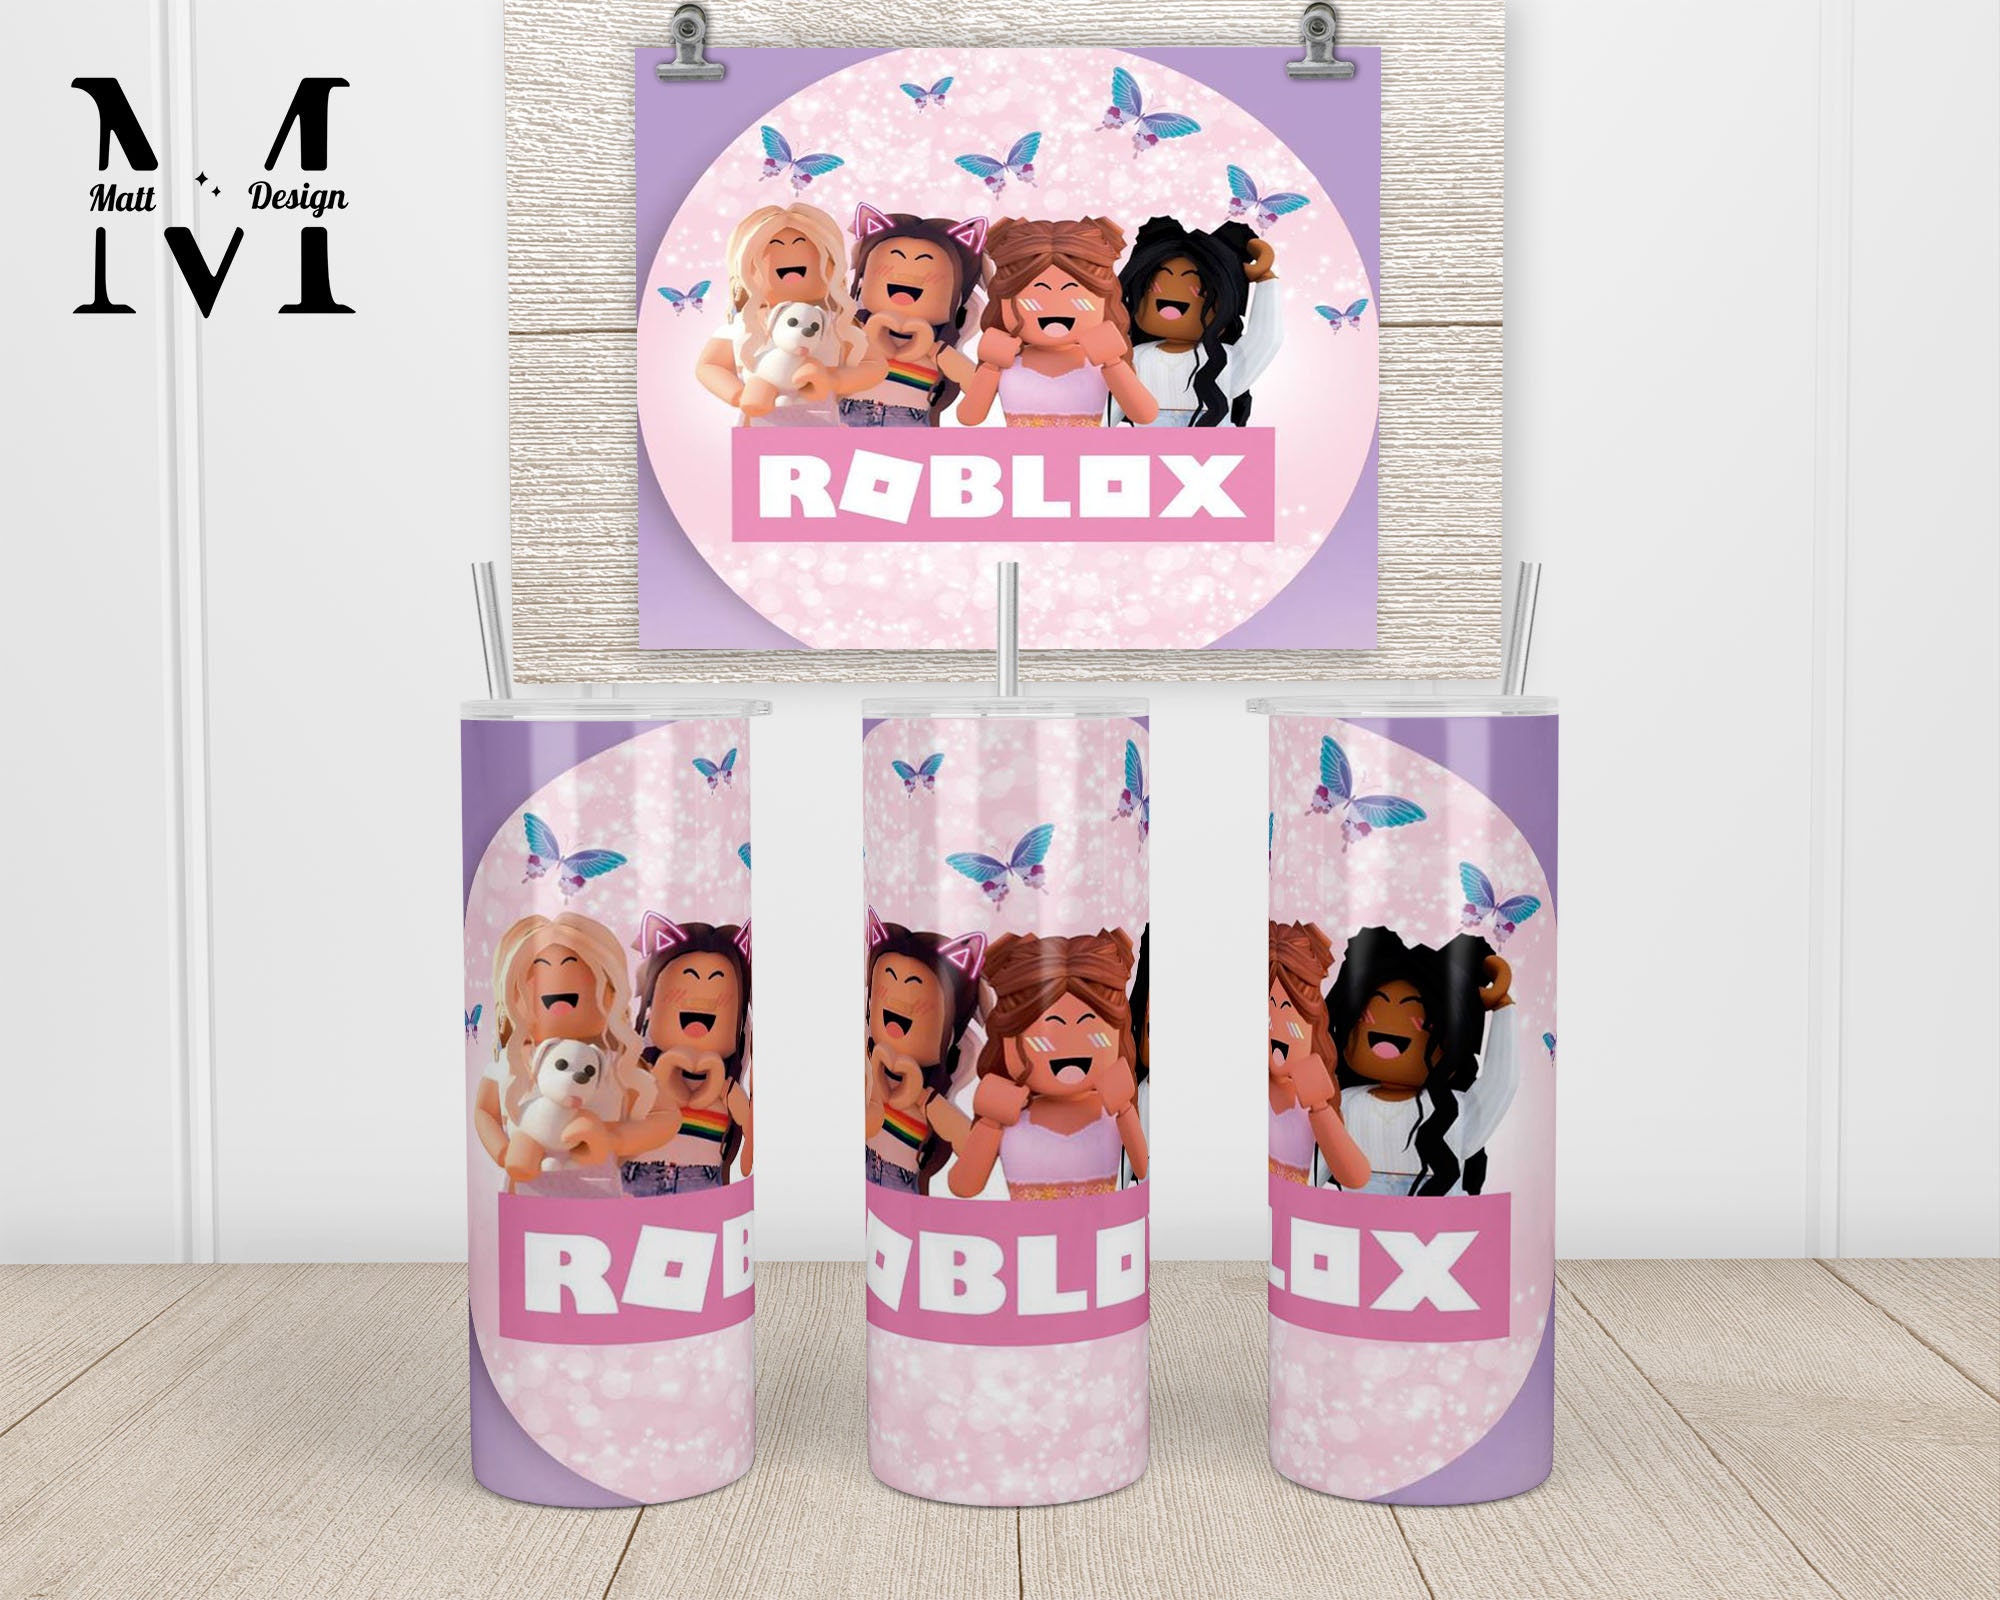 Roblox girls clipart, Roblox girls png, Roblox girls png images, Roblox  girls Bundle png, Roblox girls characters png, Roblox girls characters  images - RikunaStore